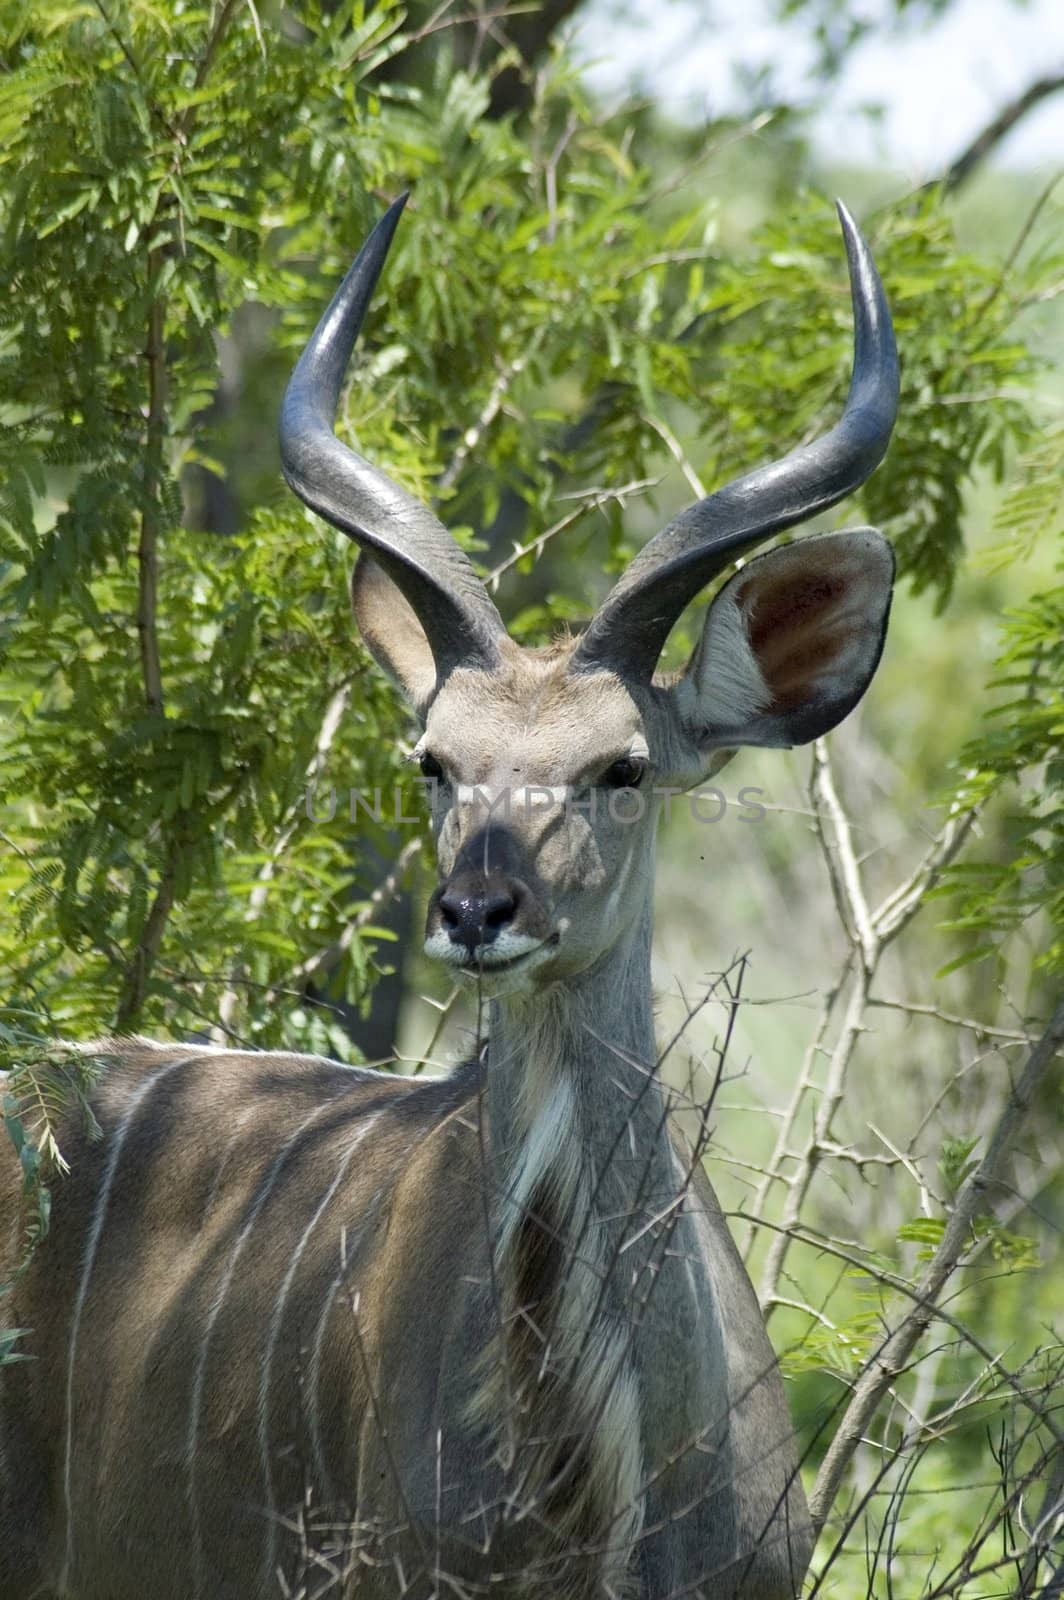 Kudu Antelope (Tragelaphus strepsiceros) in South Africa.